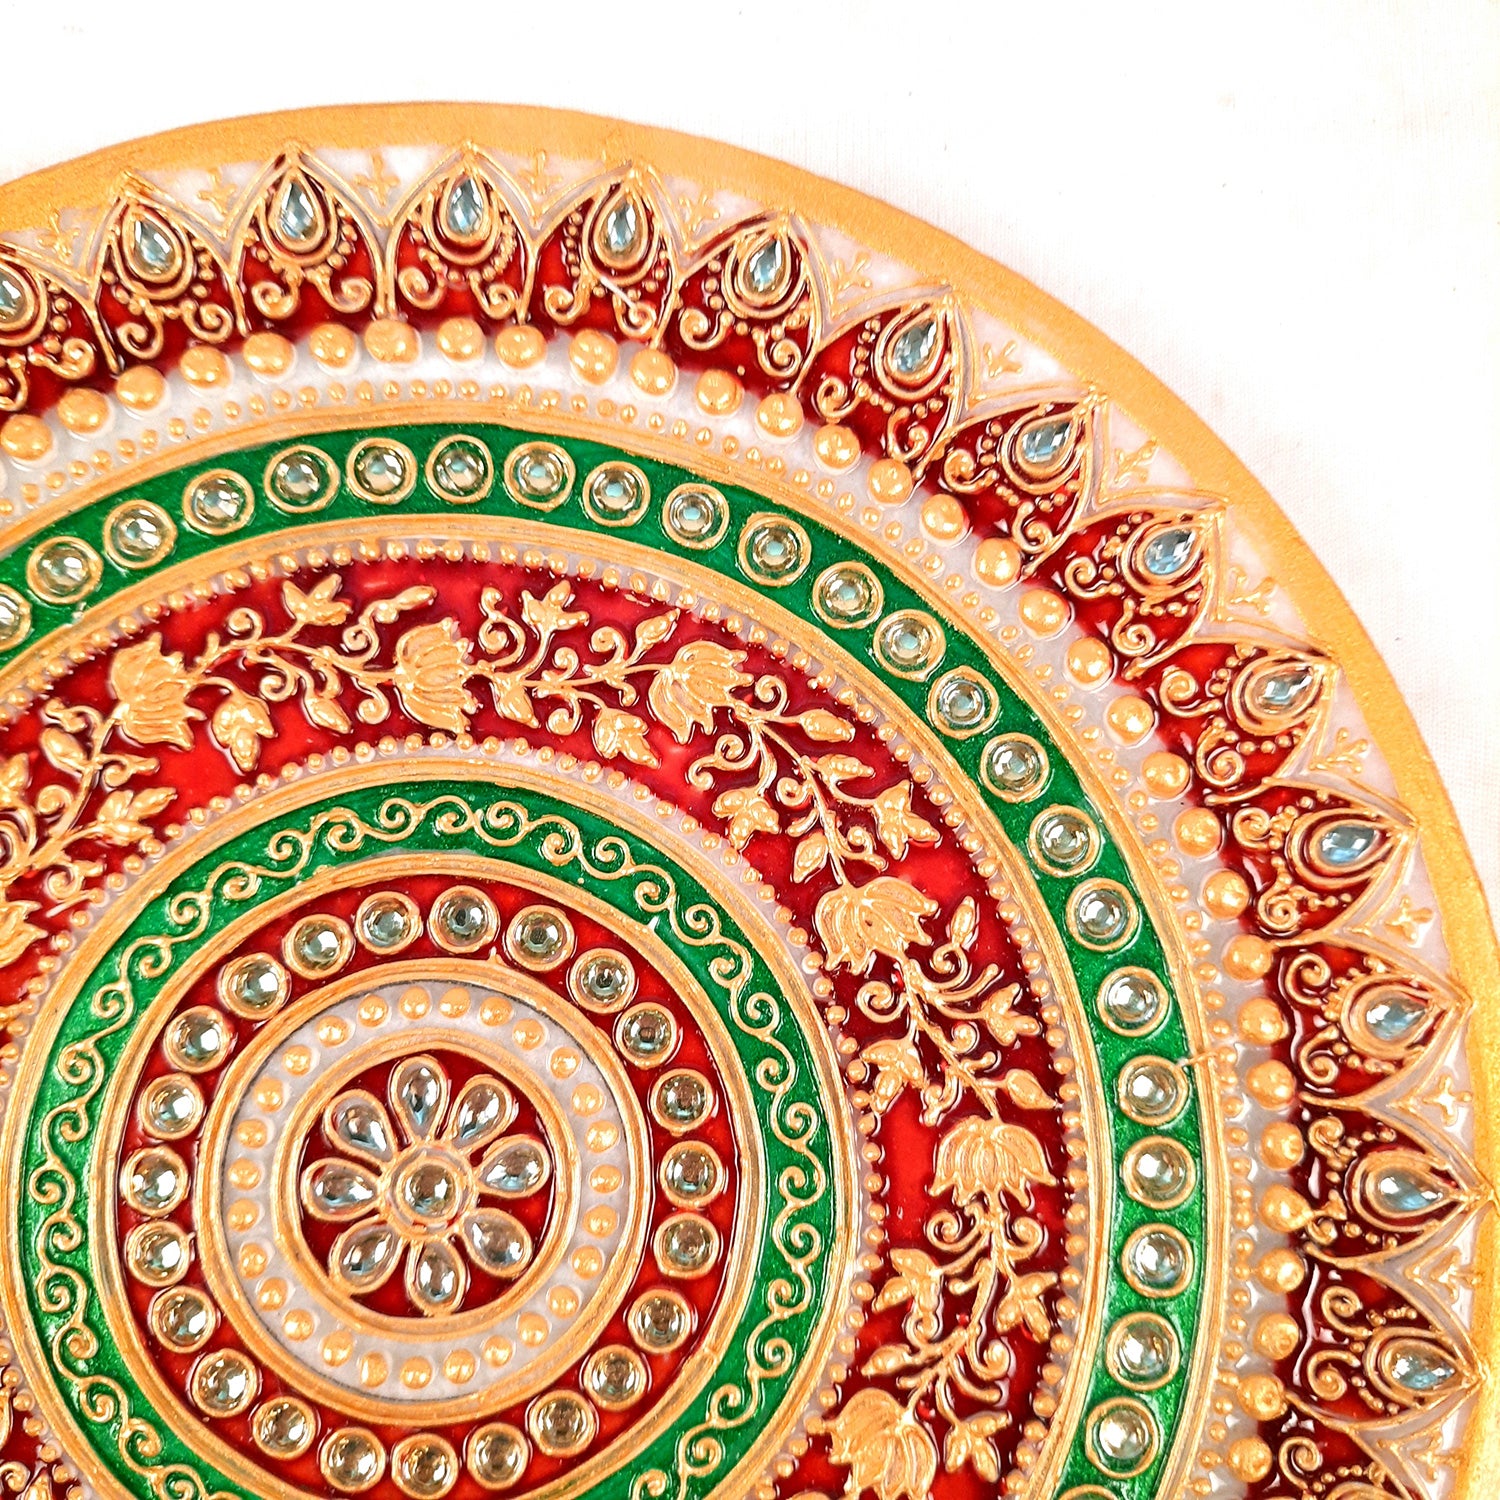 Pooja Thali | Marble Aarti Thali - Heavy Design - For Ganesh Pooja, Diwali & Karwa Chauth - 9 Inch